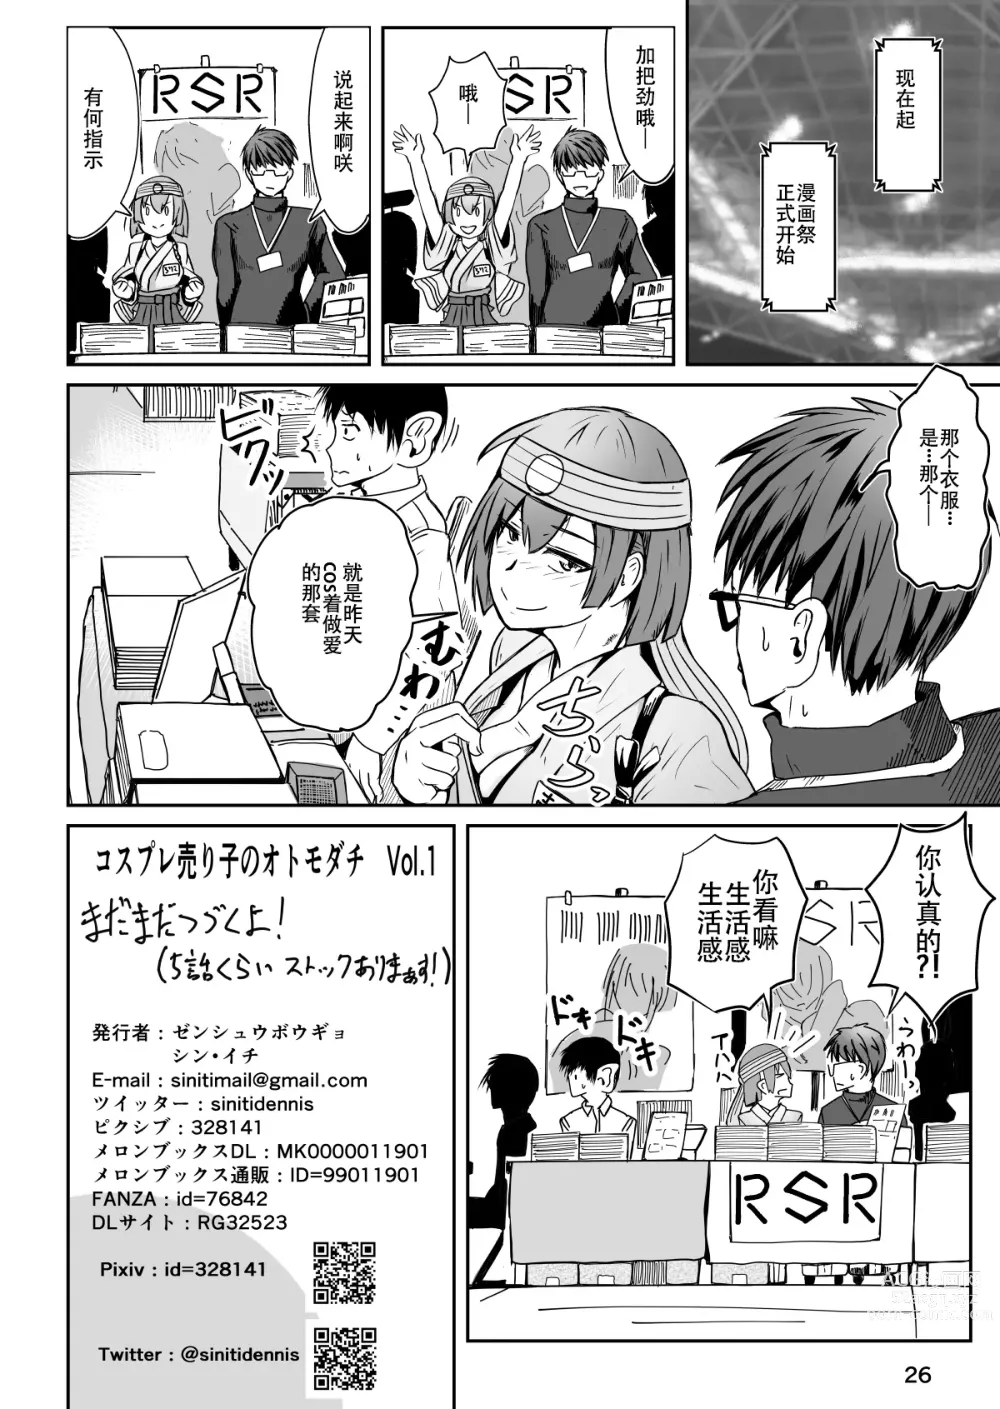 Page 26 of doujinshi Cosplay Uriko no Otomodachi: Event-zennya sex!